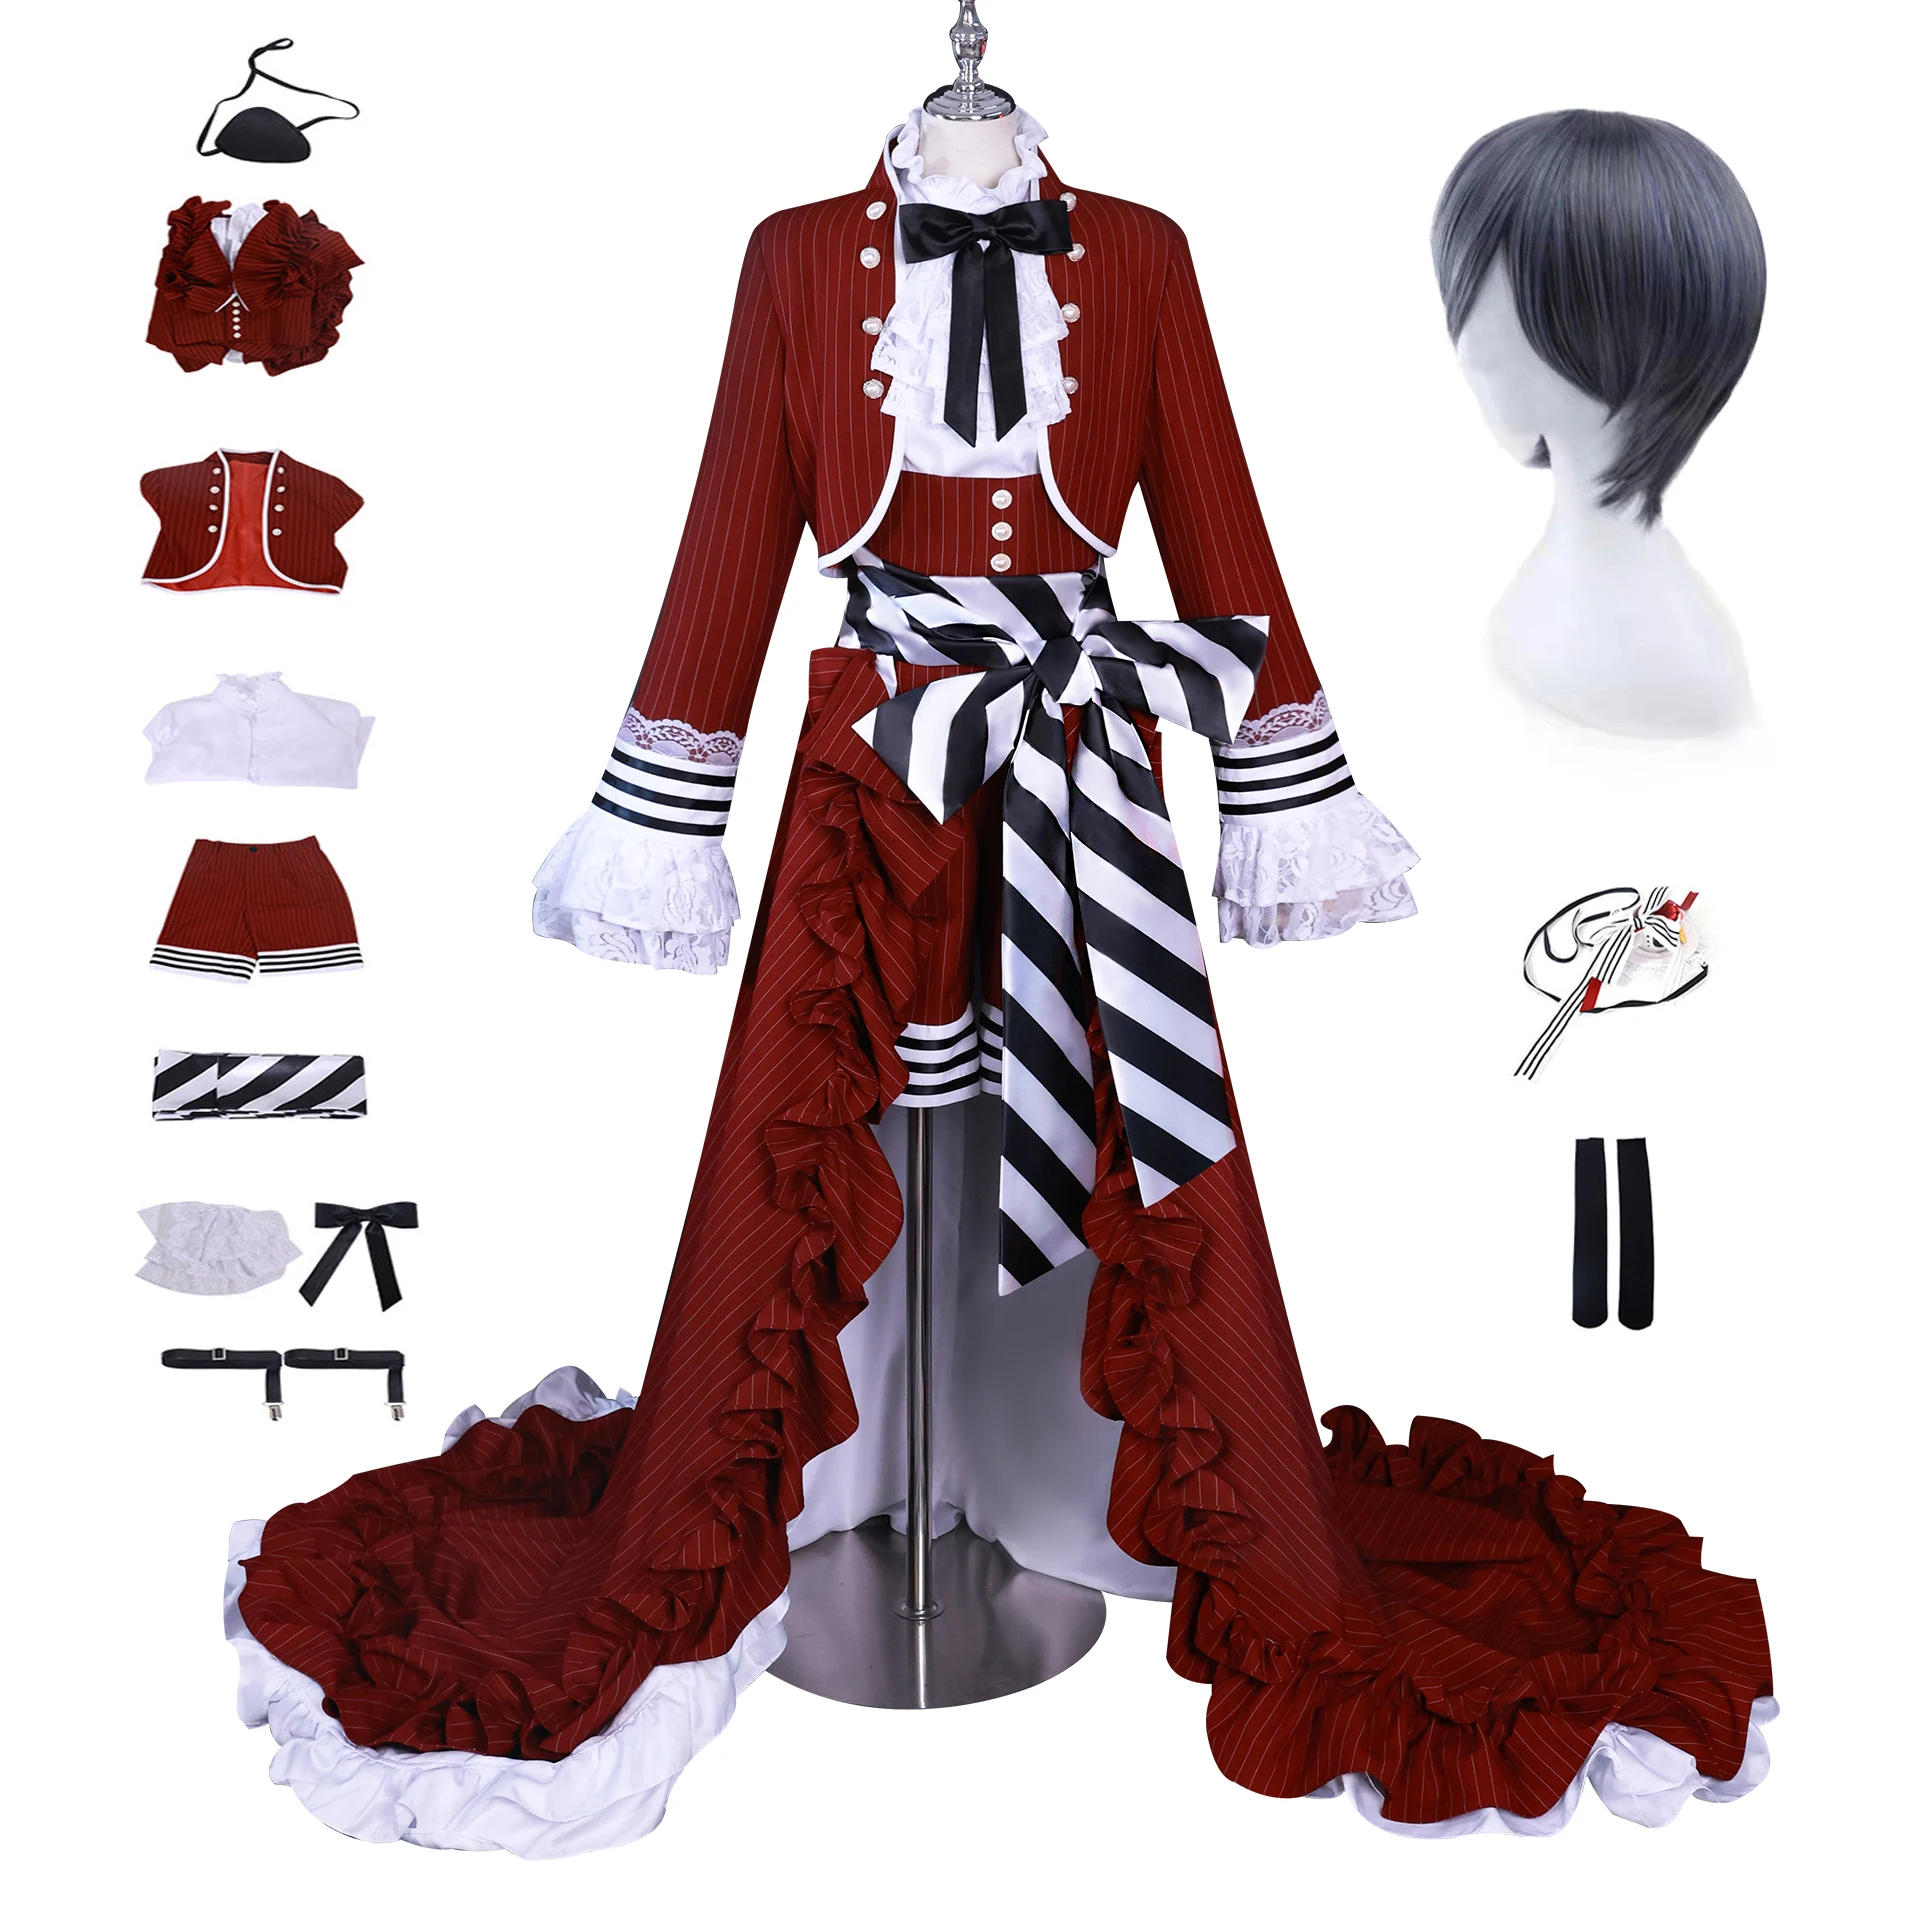 

Anime Black Ciel Butler Ciel Phantomhive Cosplay Costume Game Red Tea Cup Party Ciel Uniform Hallowen Play Role for Women Men